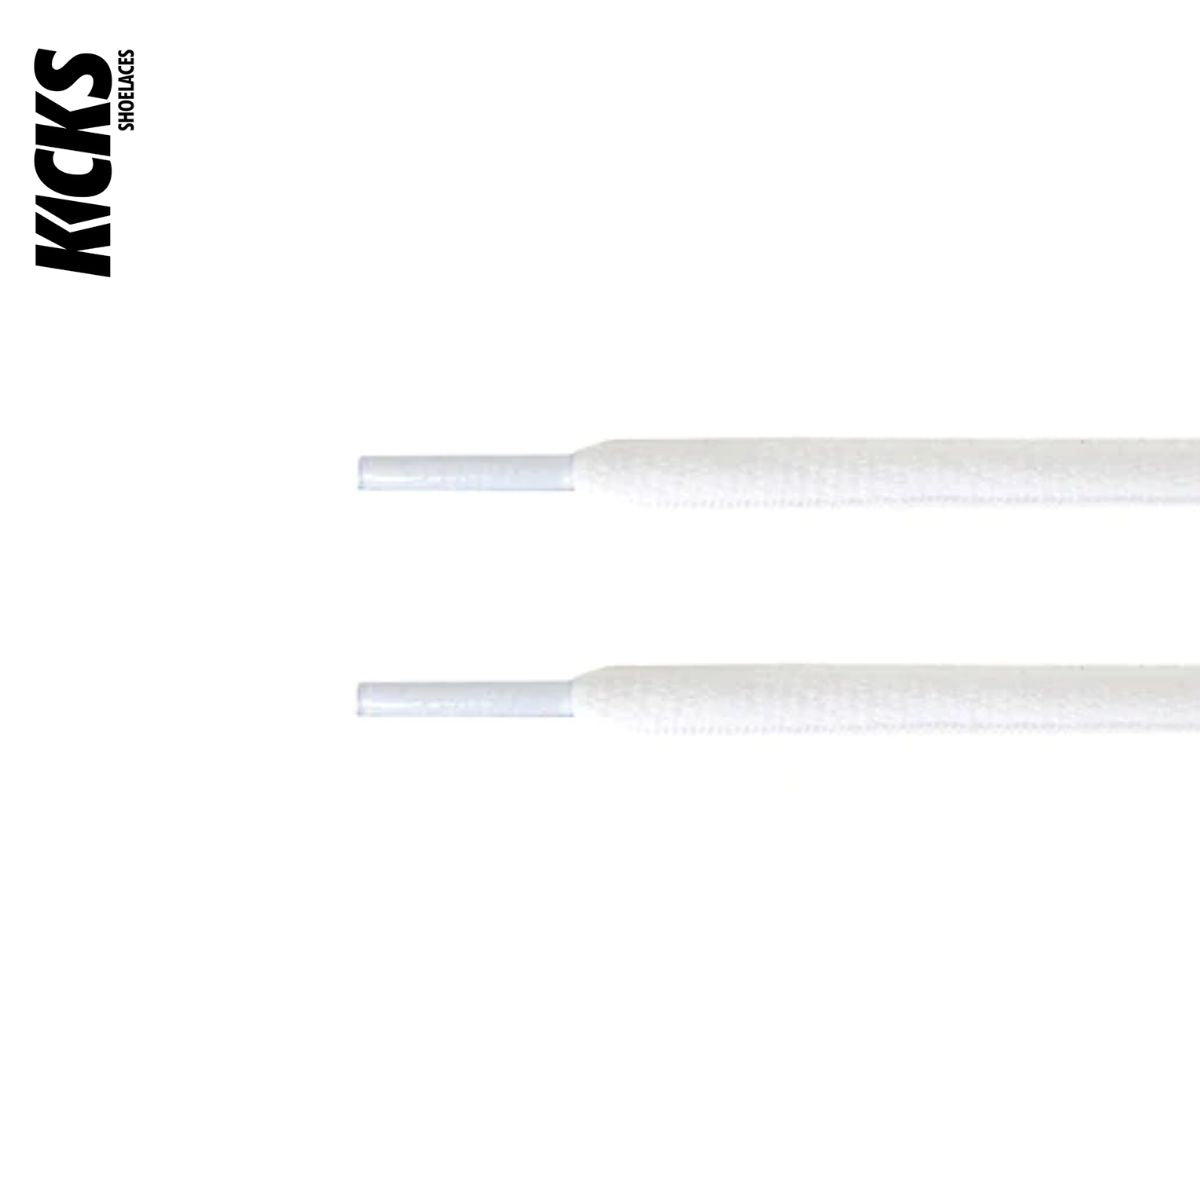 Nike Air Presto Replacement Shoelaces - Kicks Shoelaces